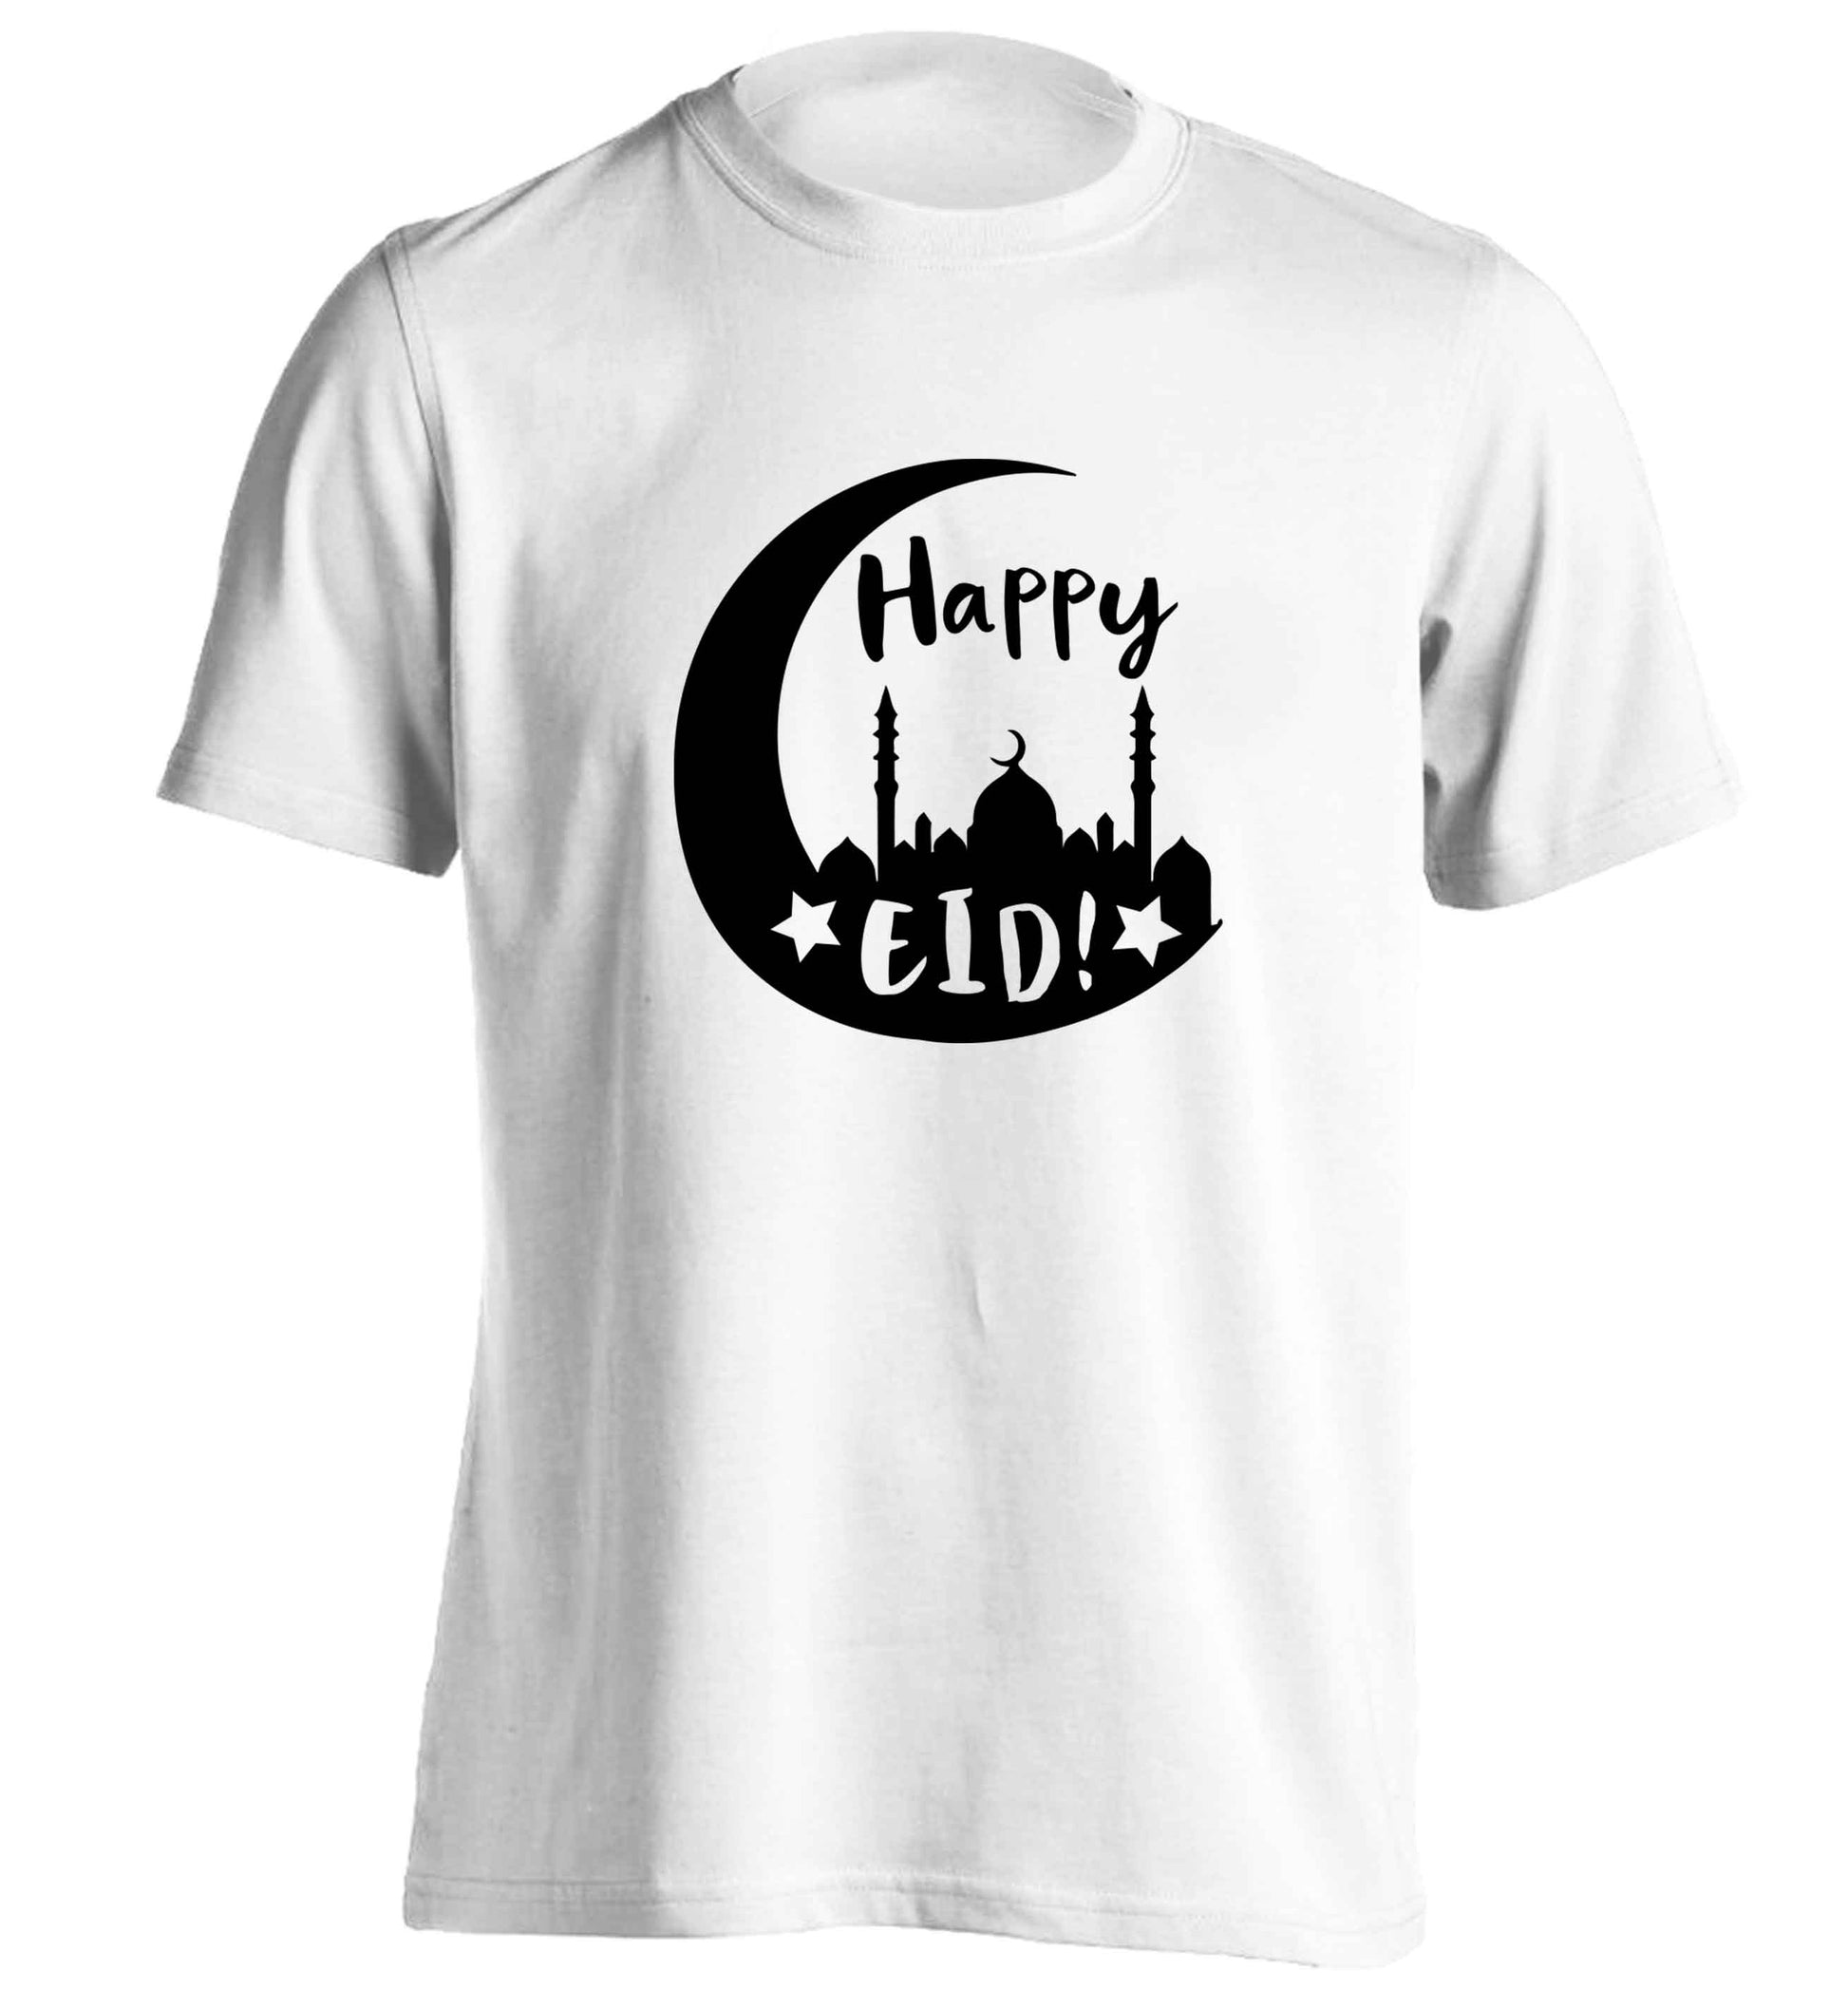 Happy Eid adults unisex white Tshirt 2XL